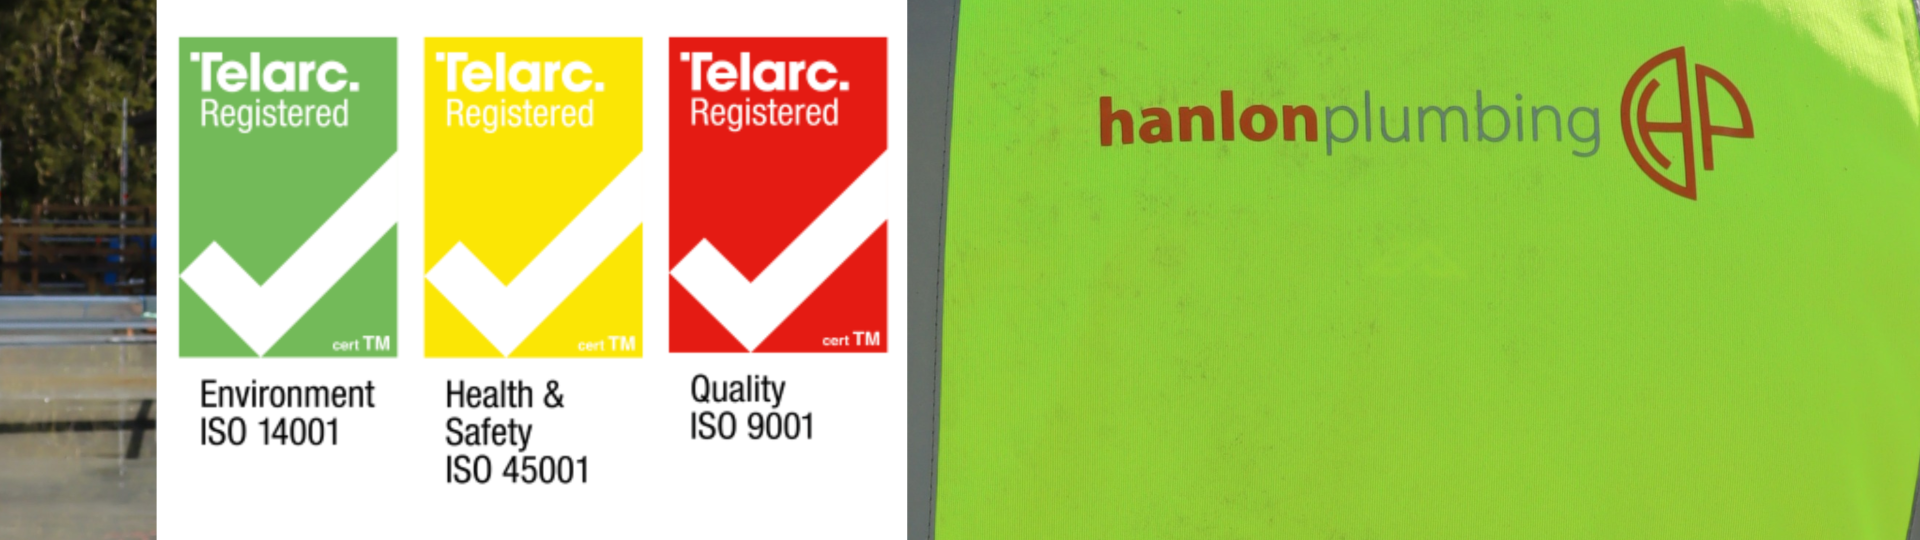 Telarc ISO 1